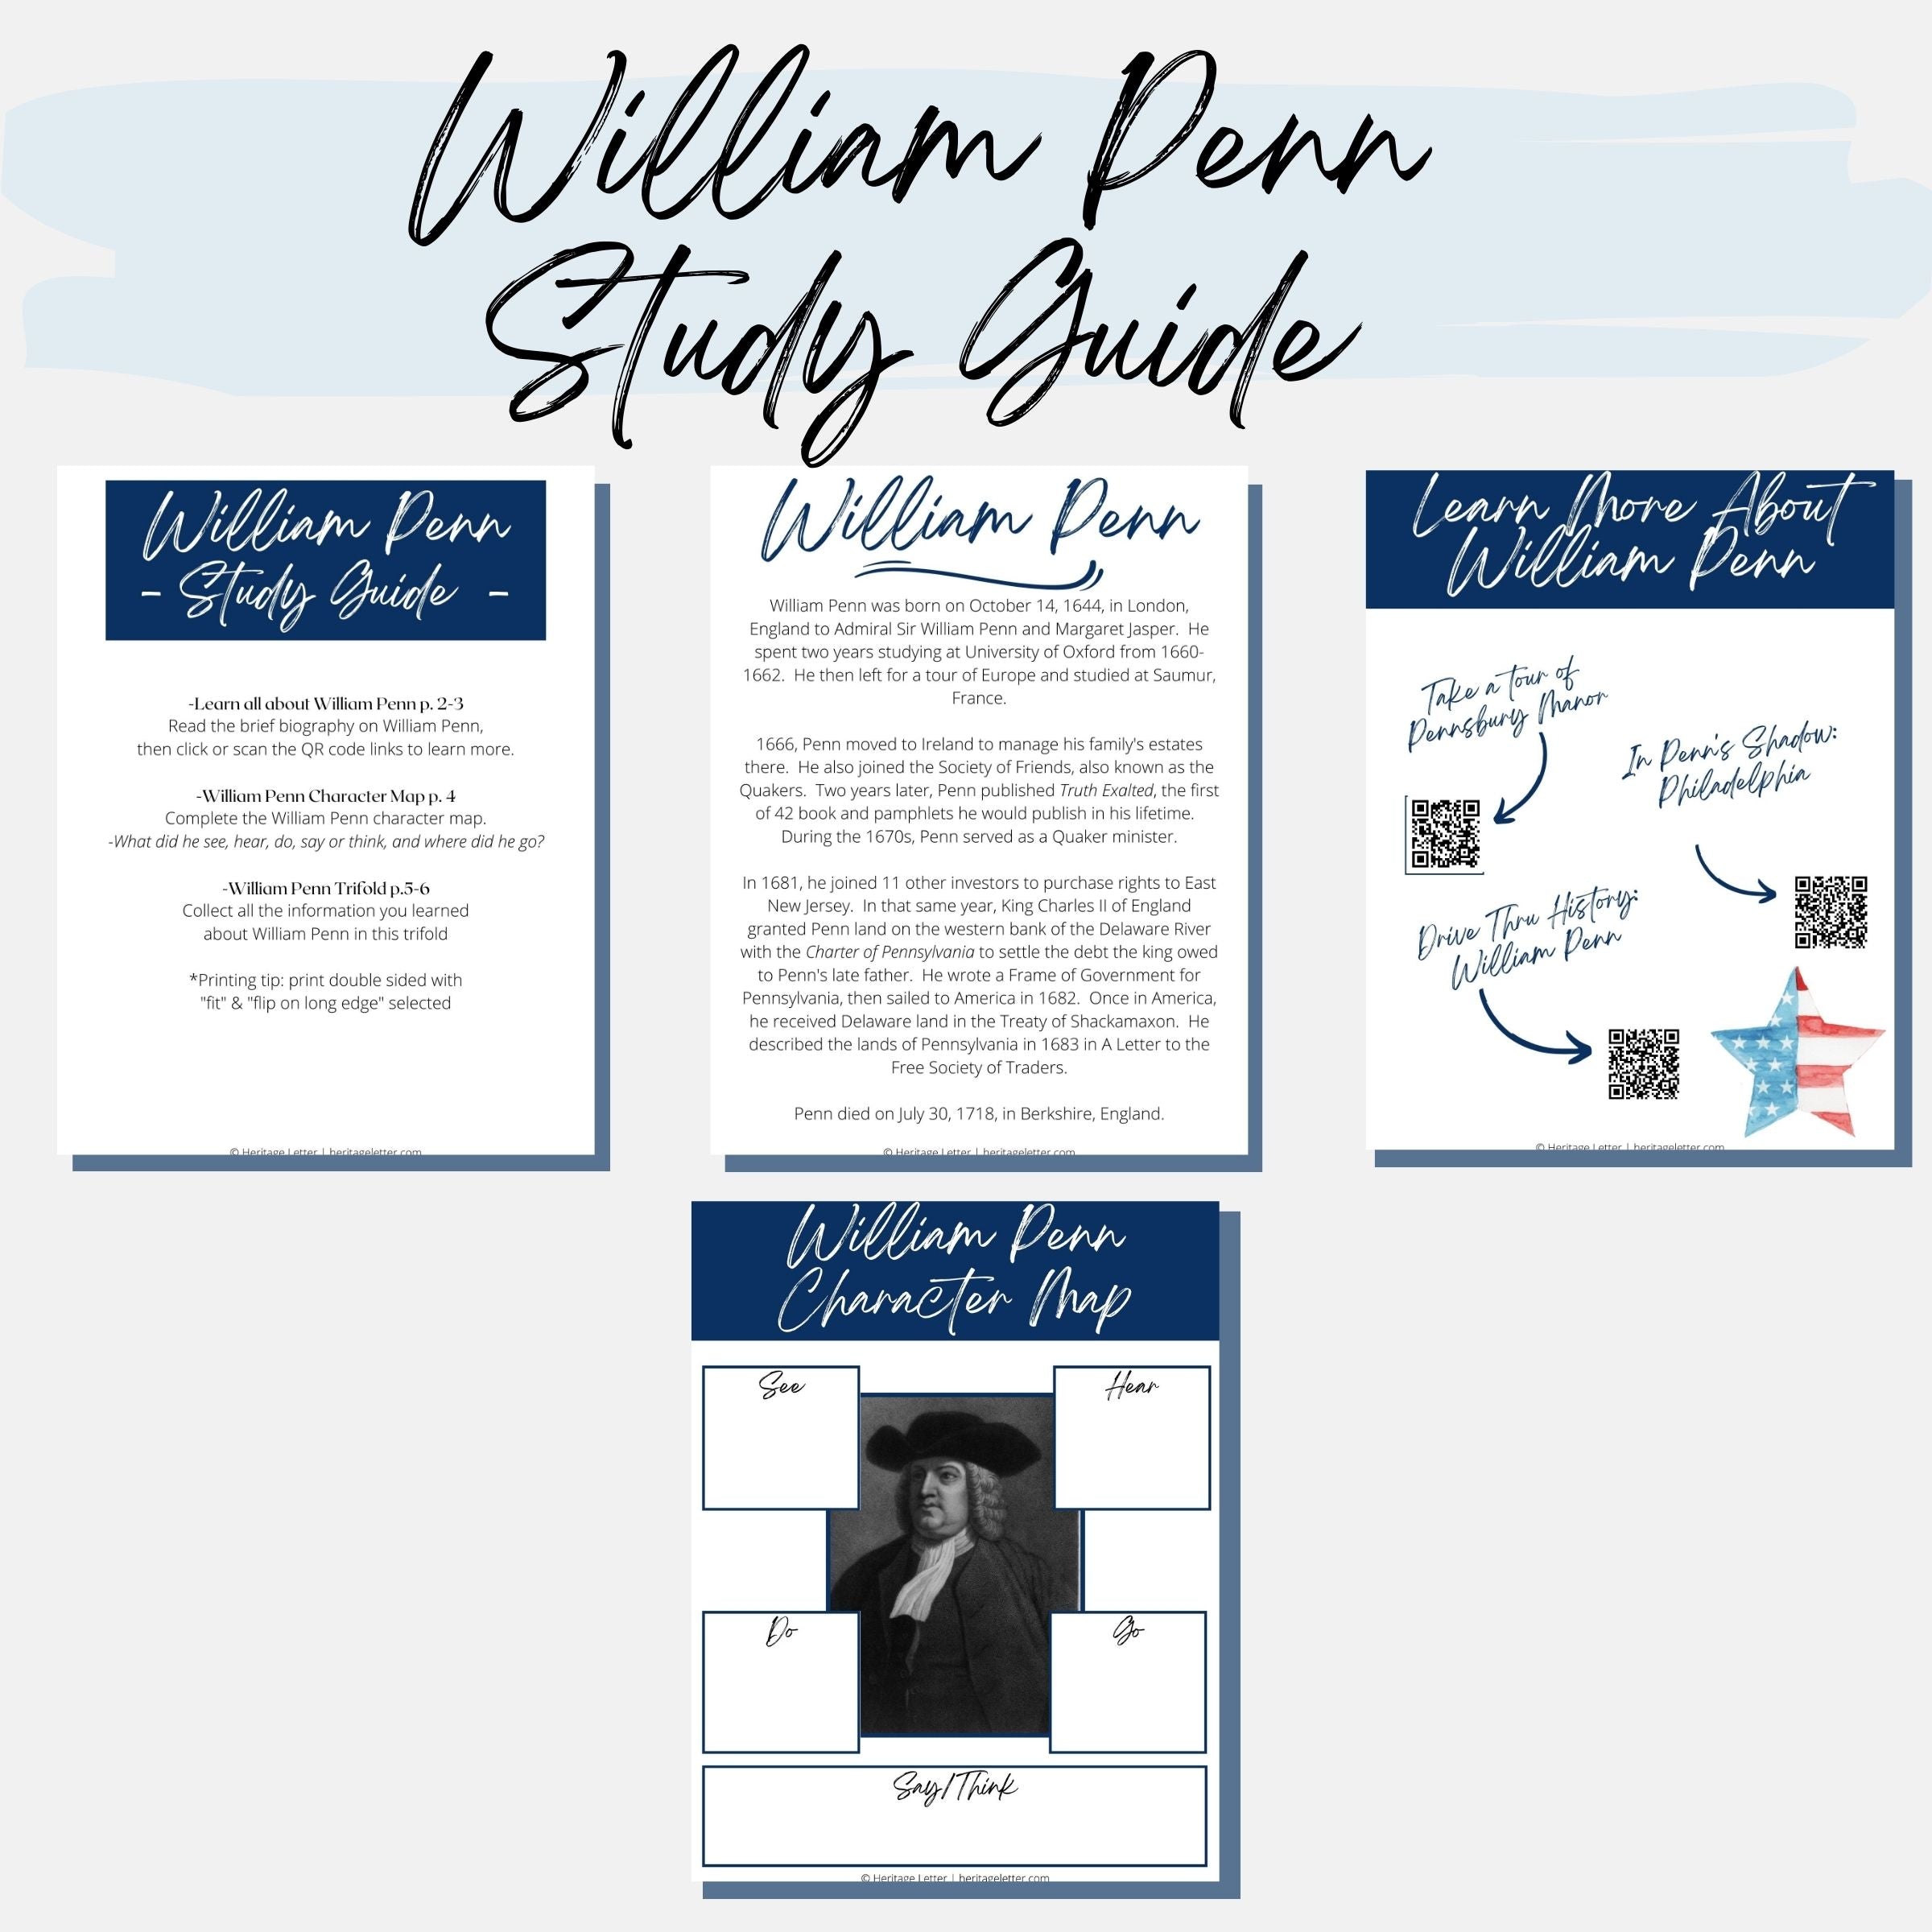 William Penn Study Guide